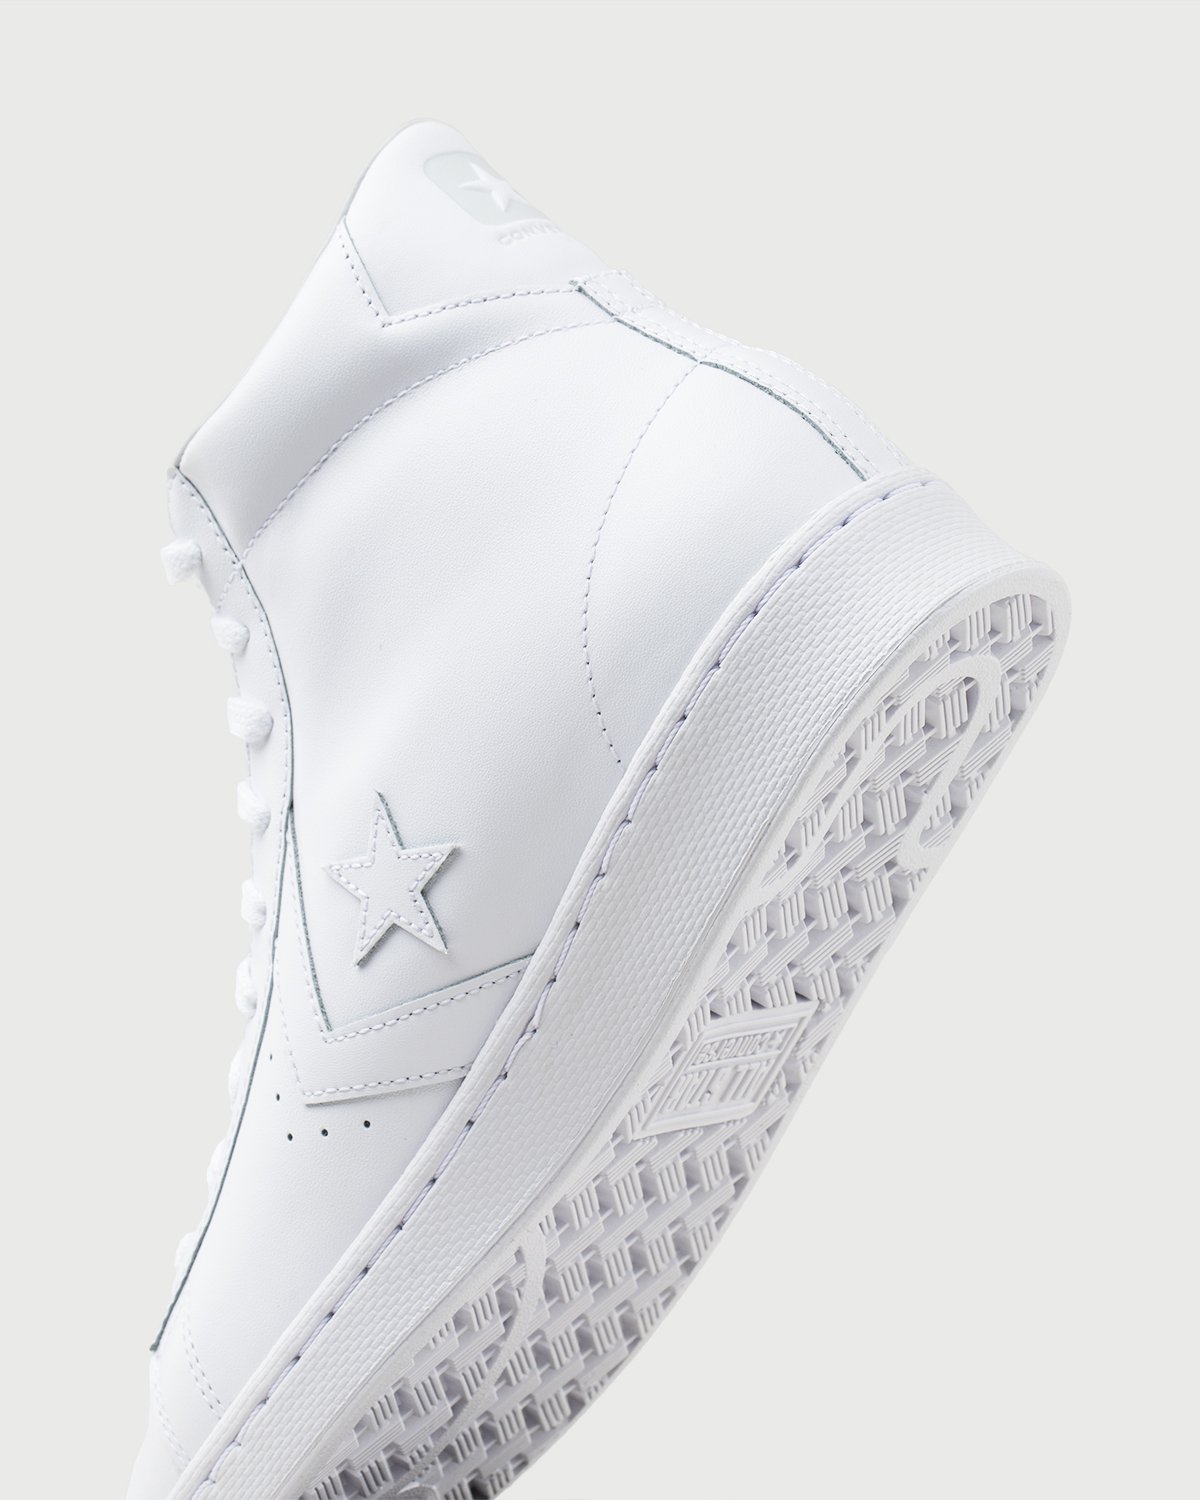 Converse - Pro Leather Hi White - Footwear - White - Image 5